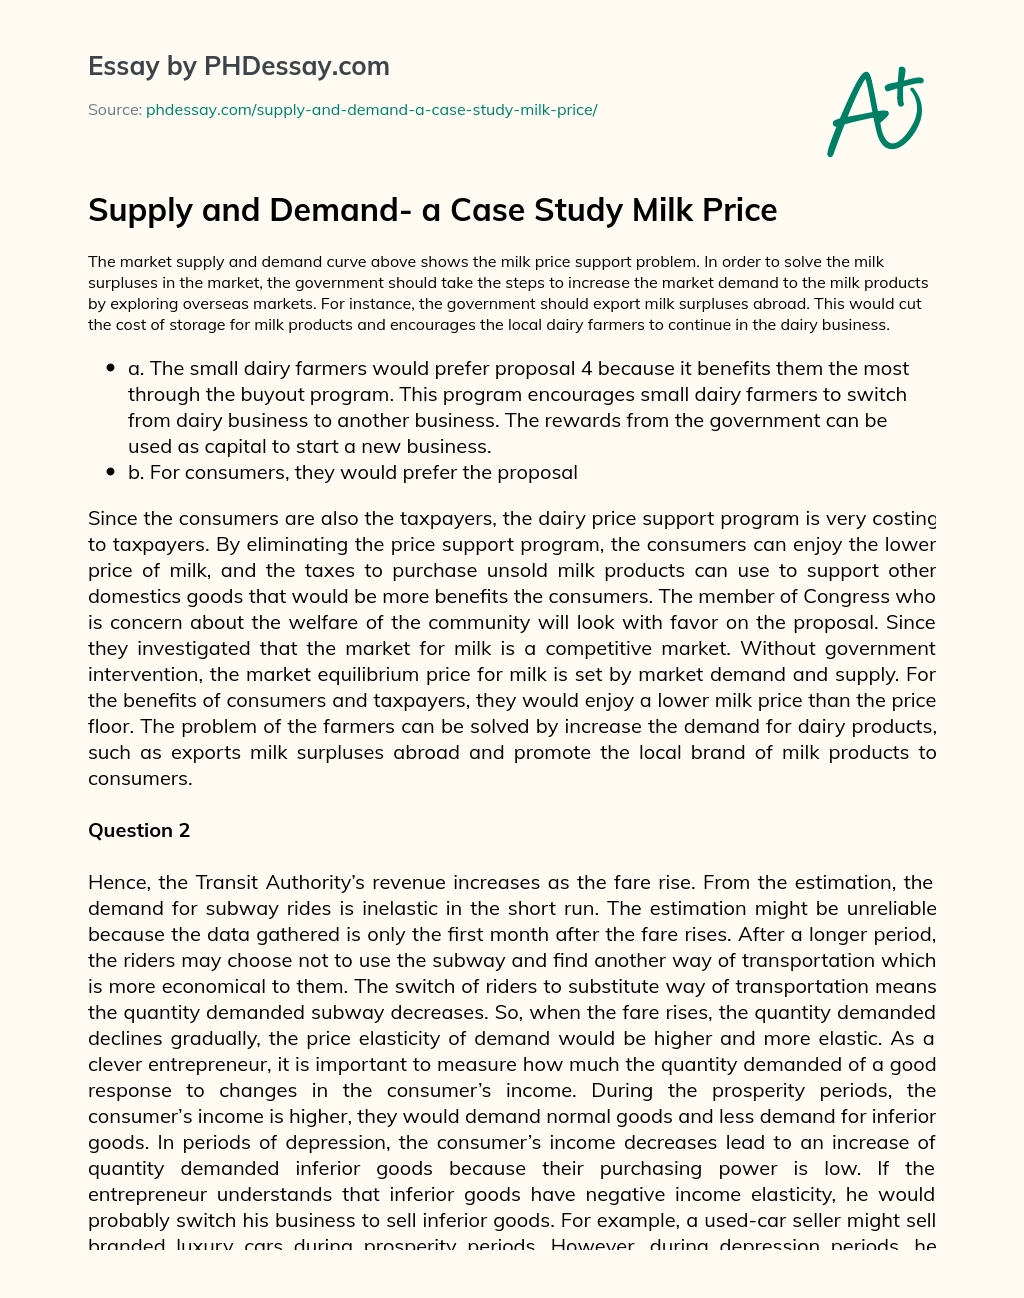 Supply and Demand- a Case Study Milk Price essay